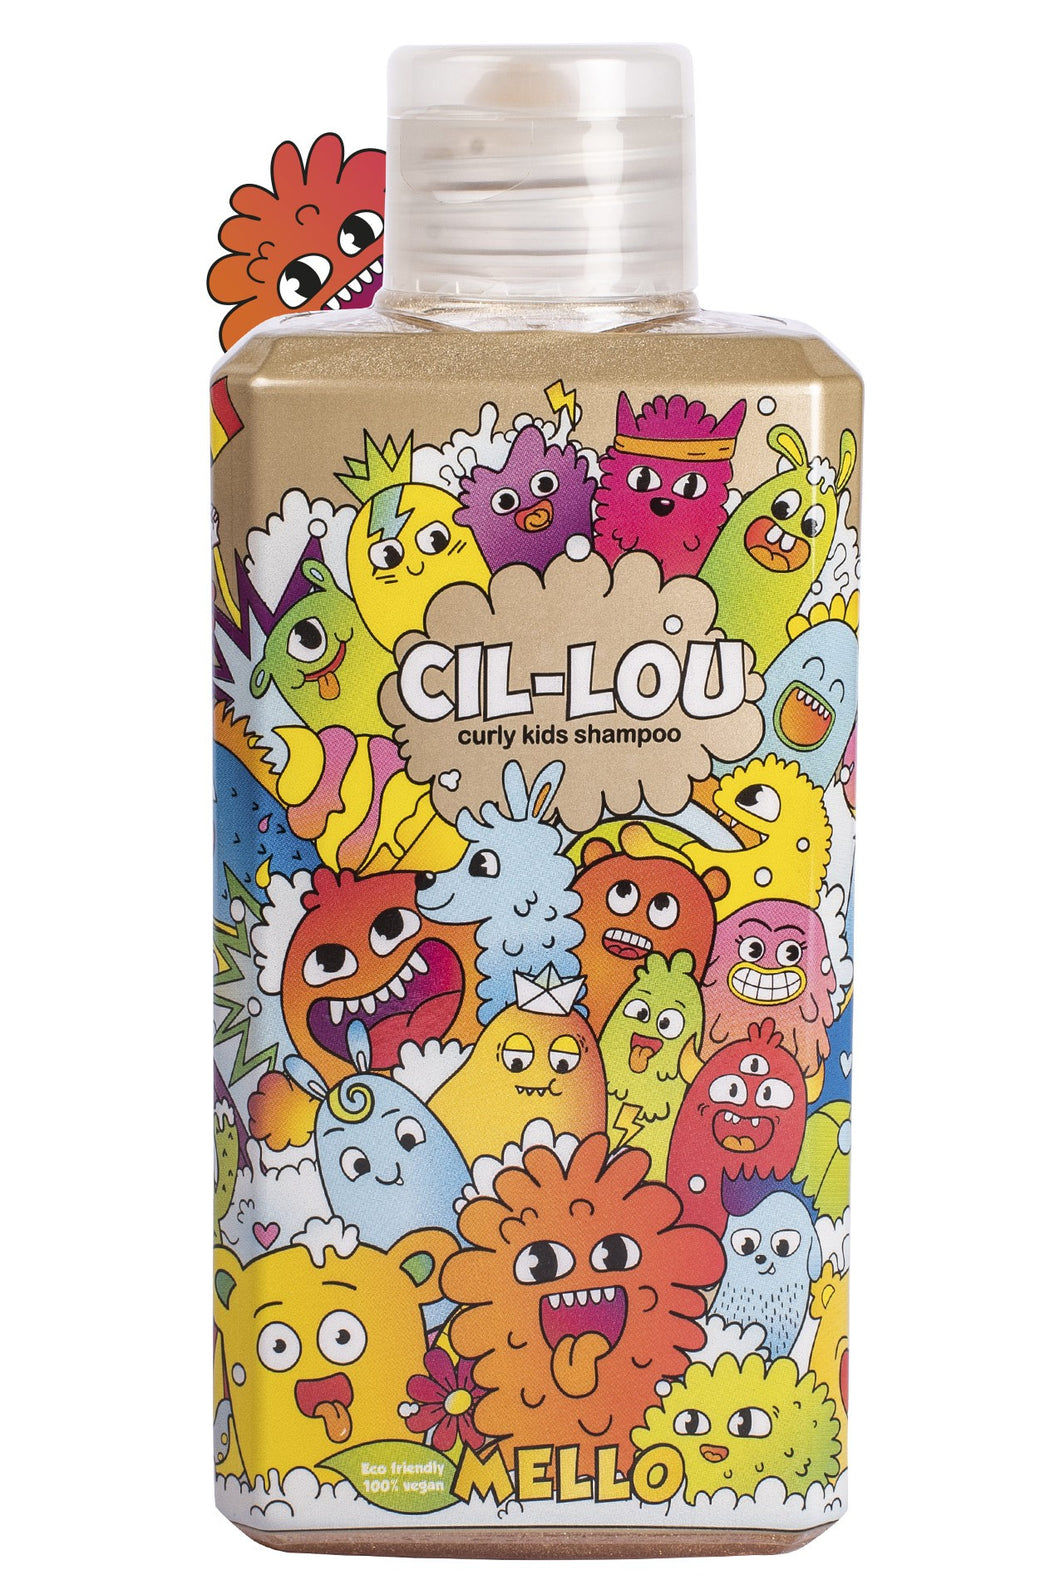 Cil-Lou - Curly kids shampoo - Mello